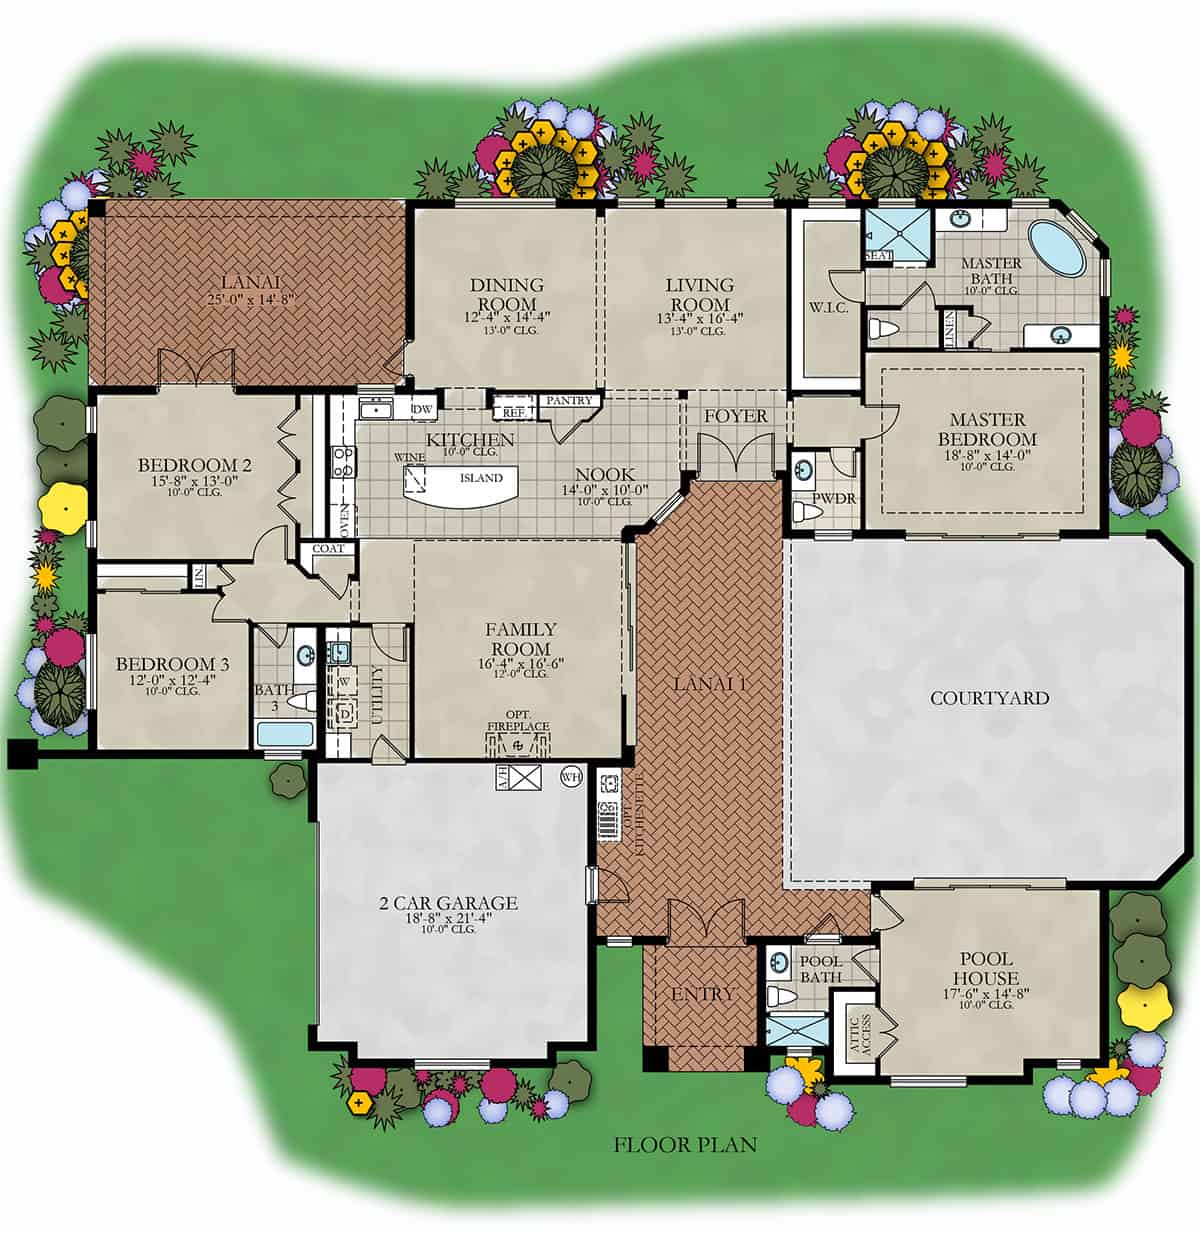 Courtyard IV model home floor plan